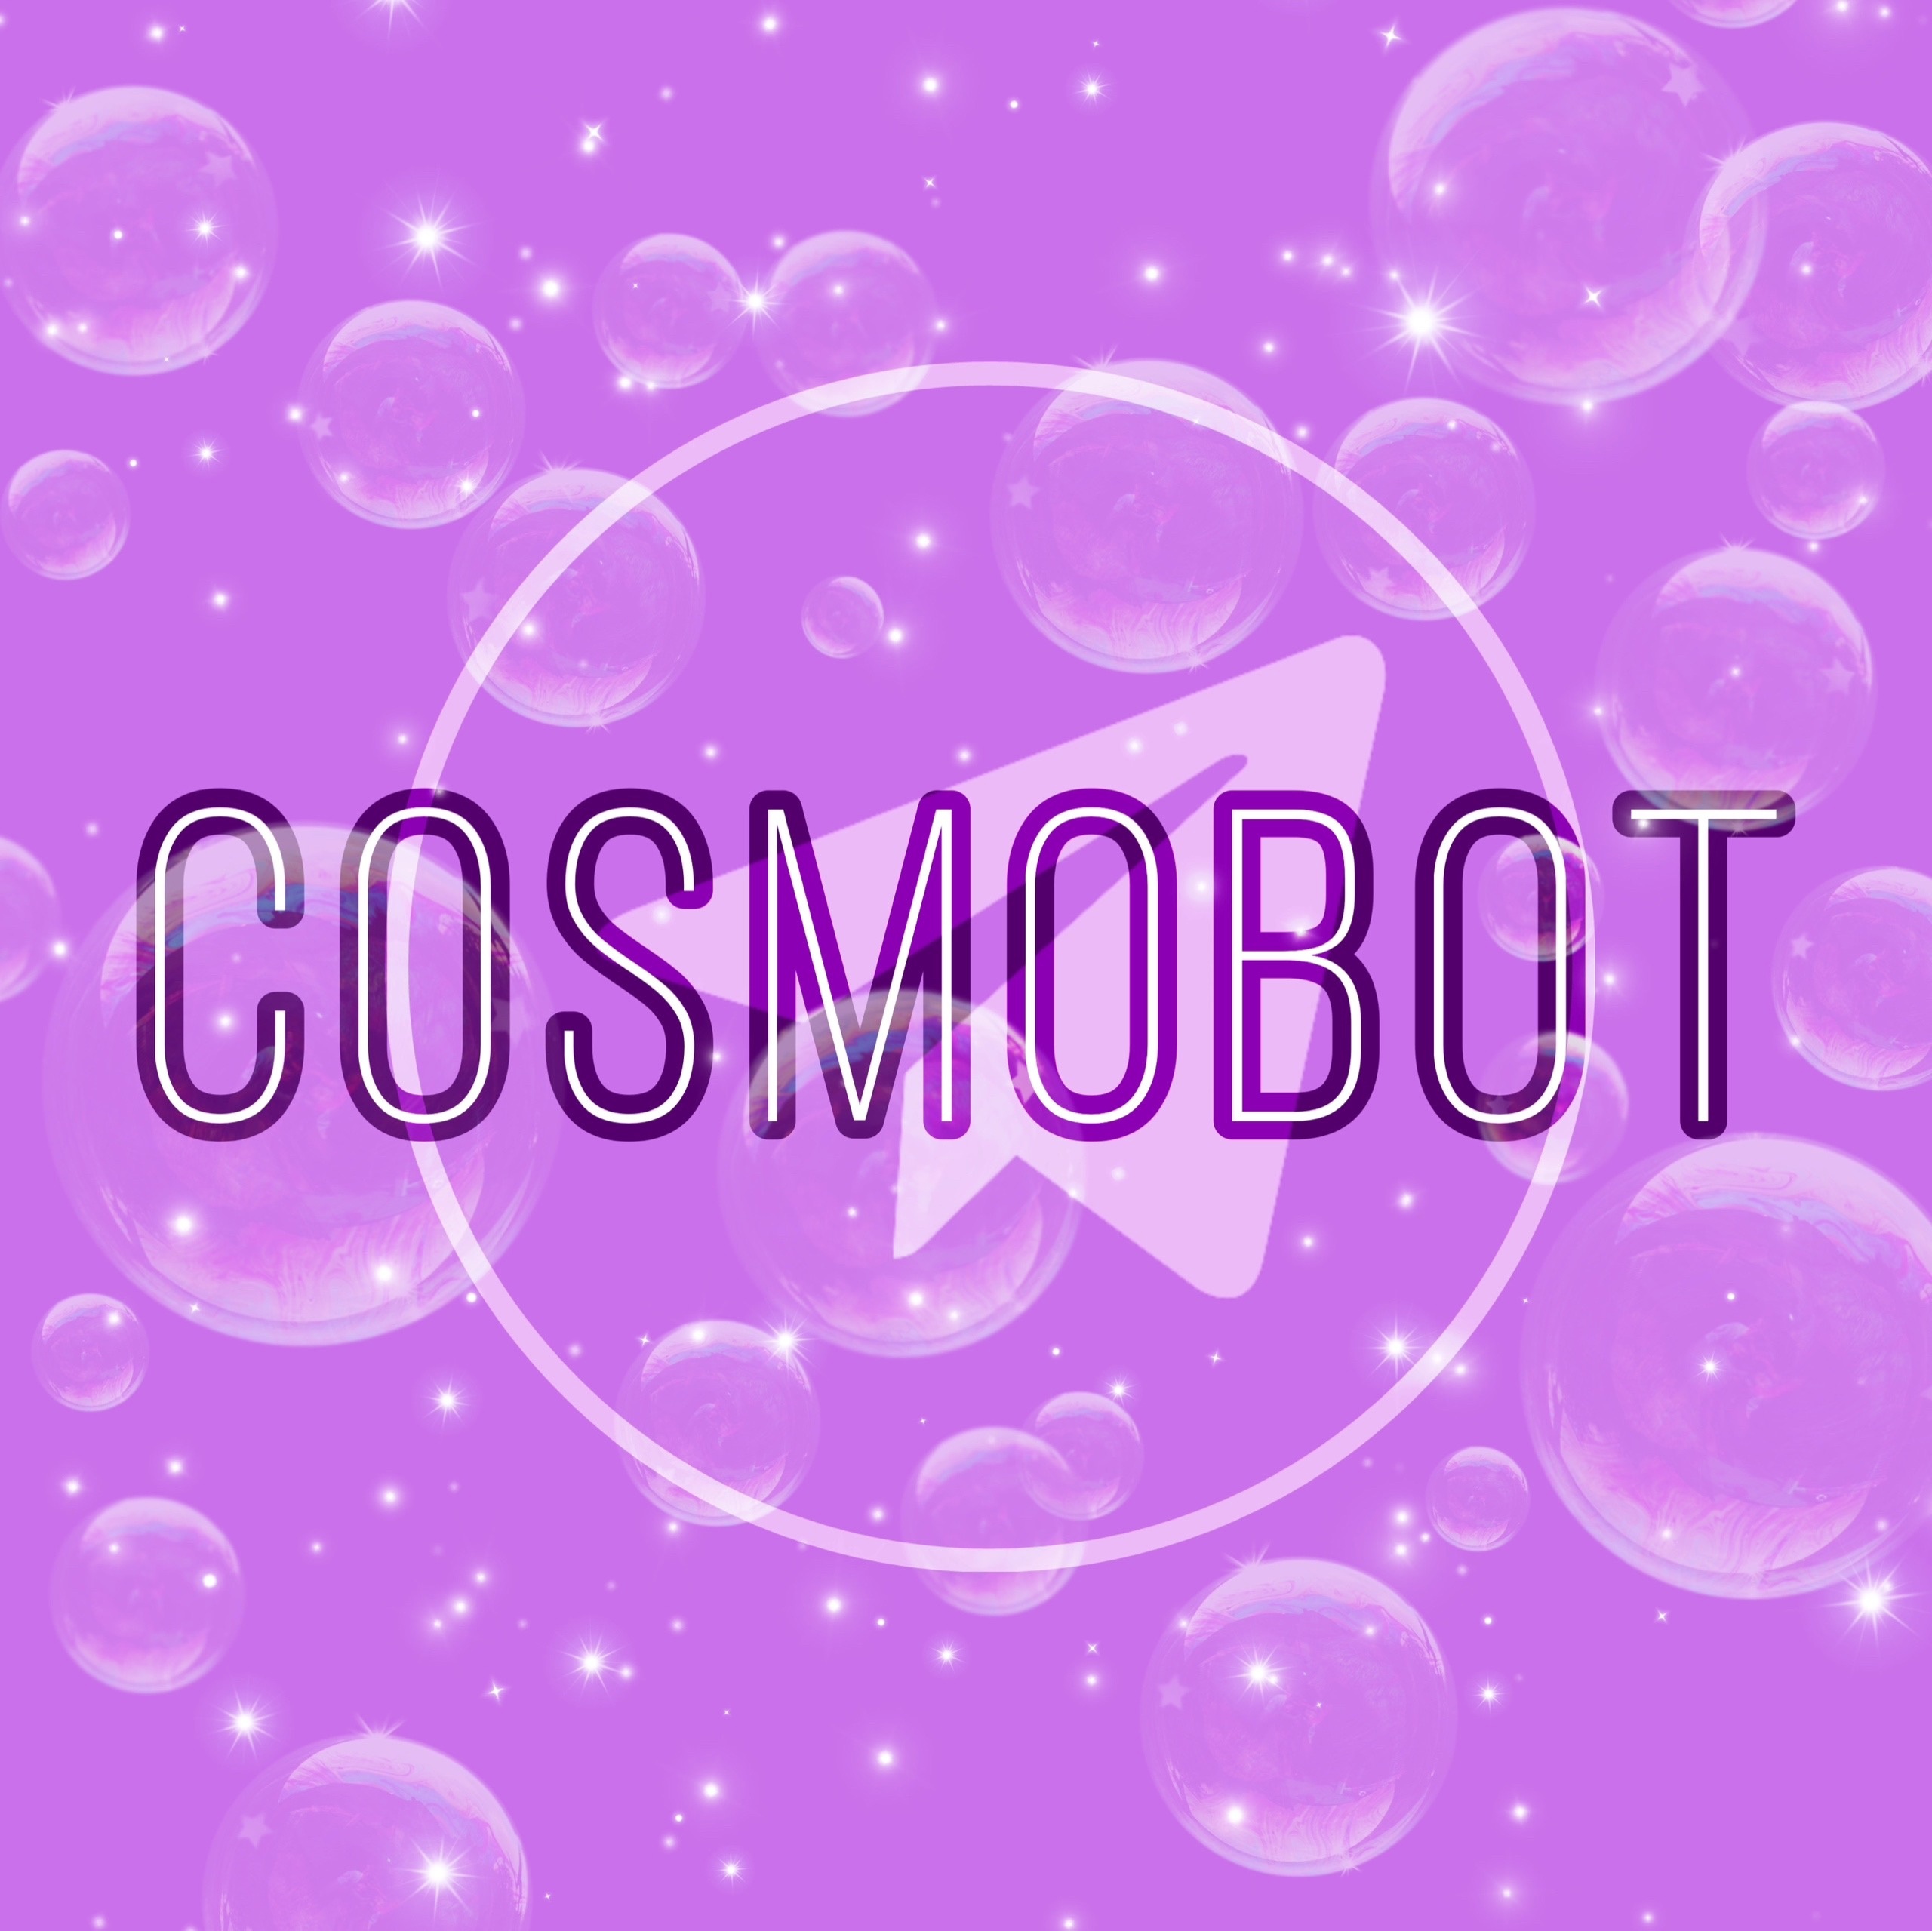 CosmoBot